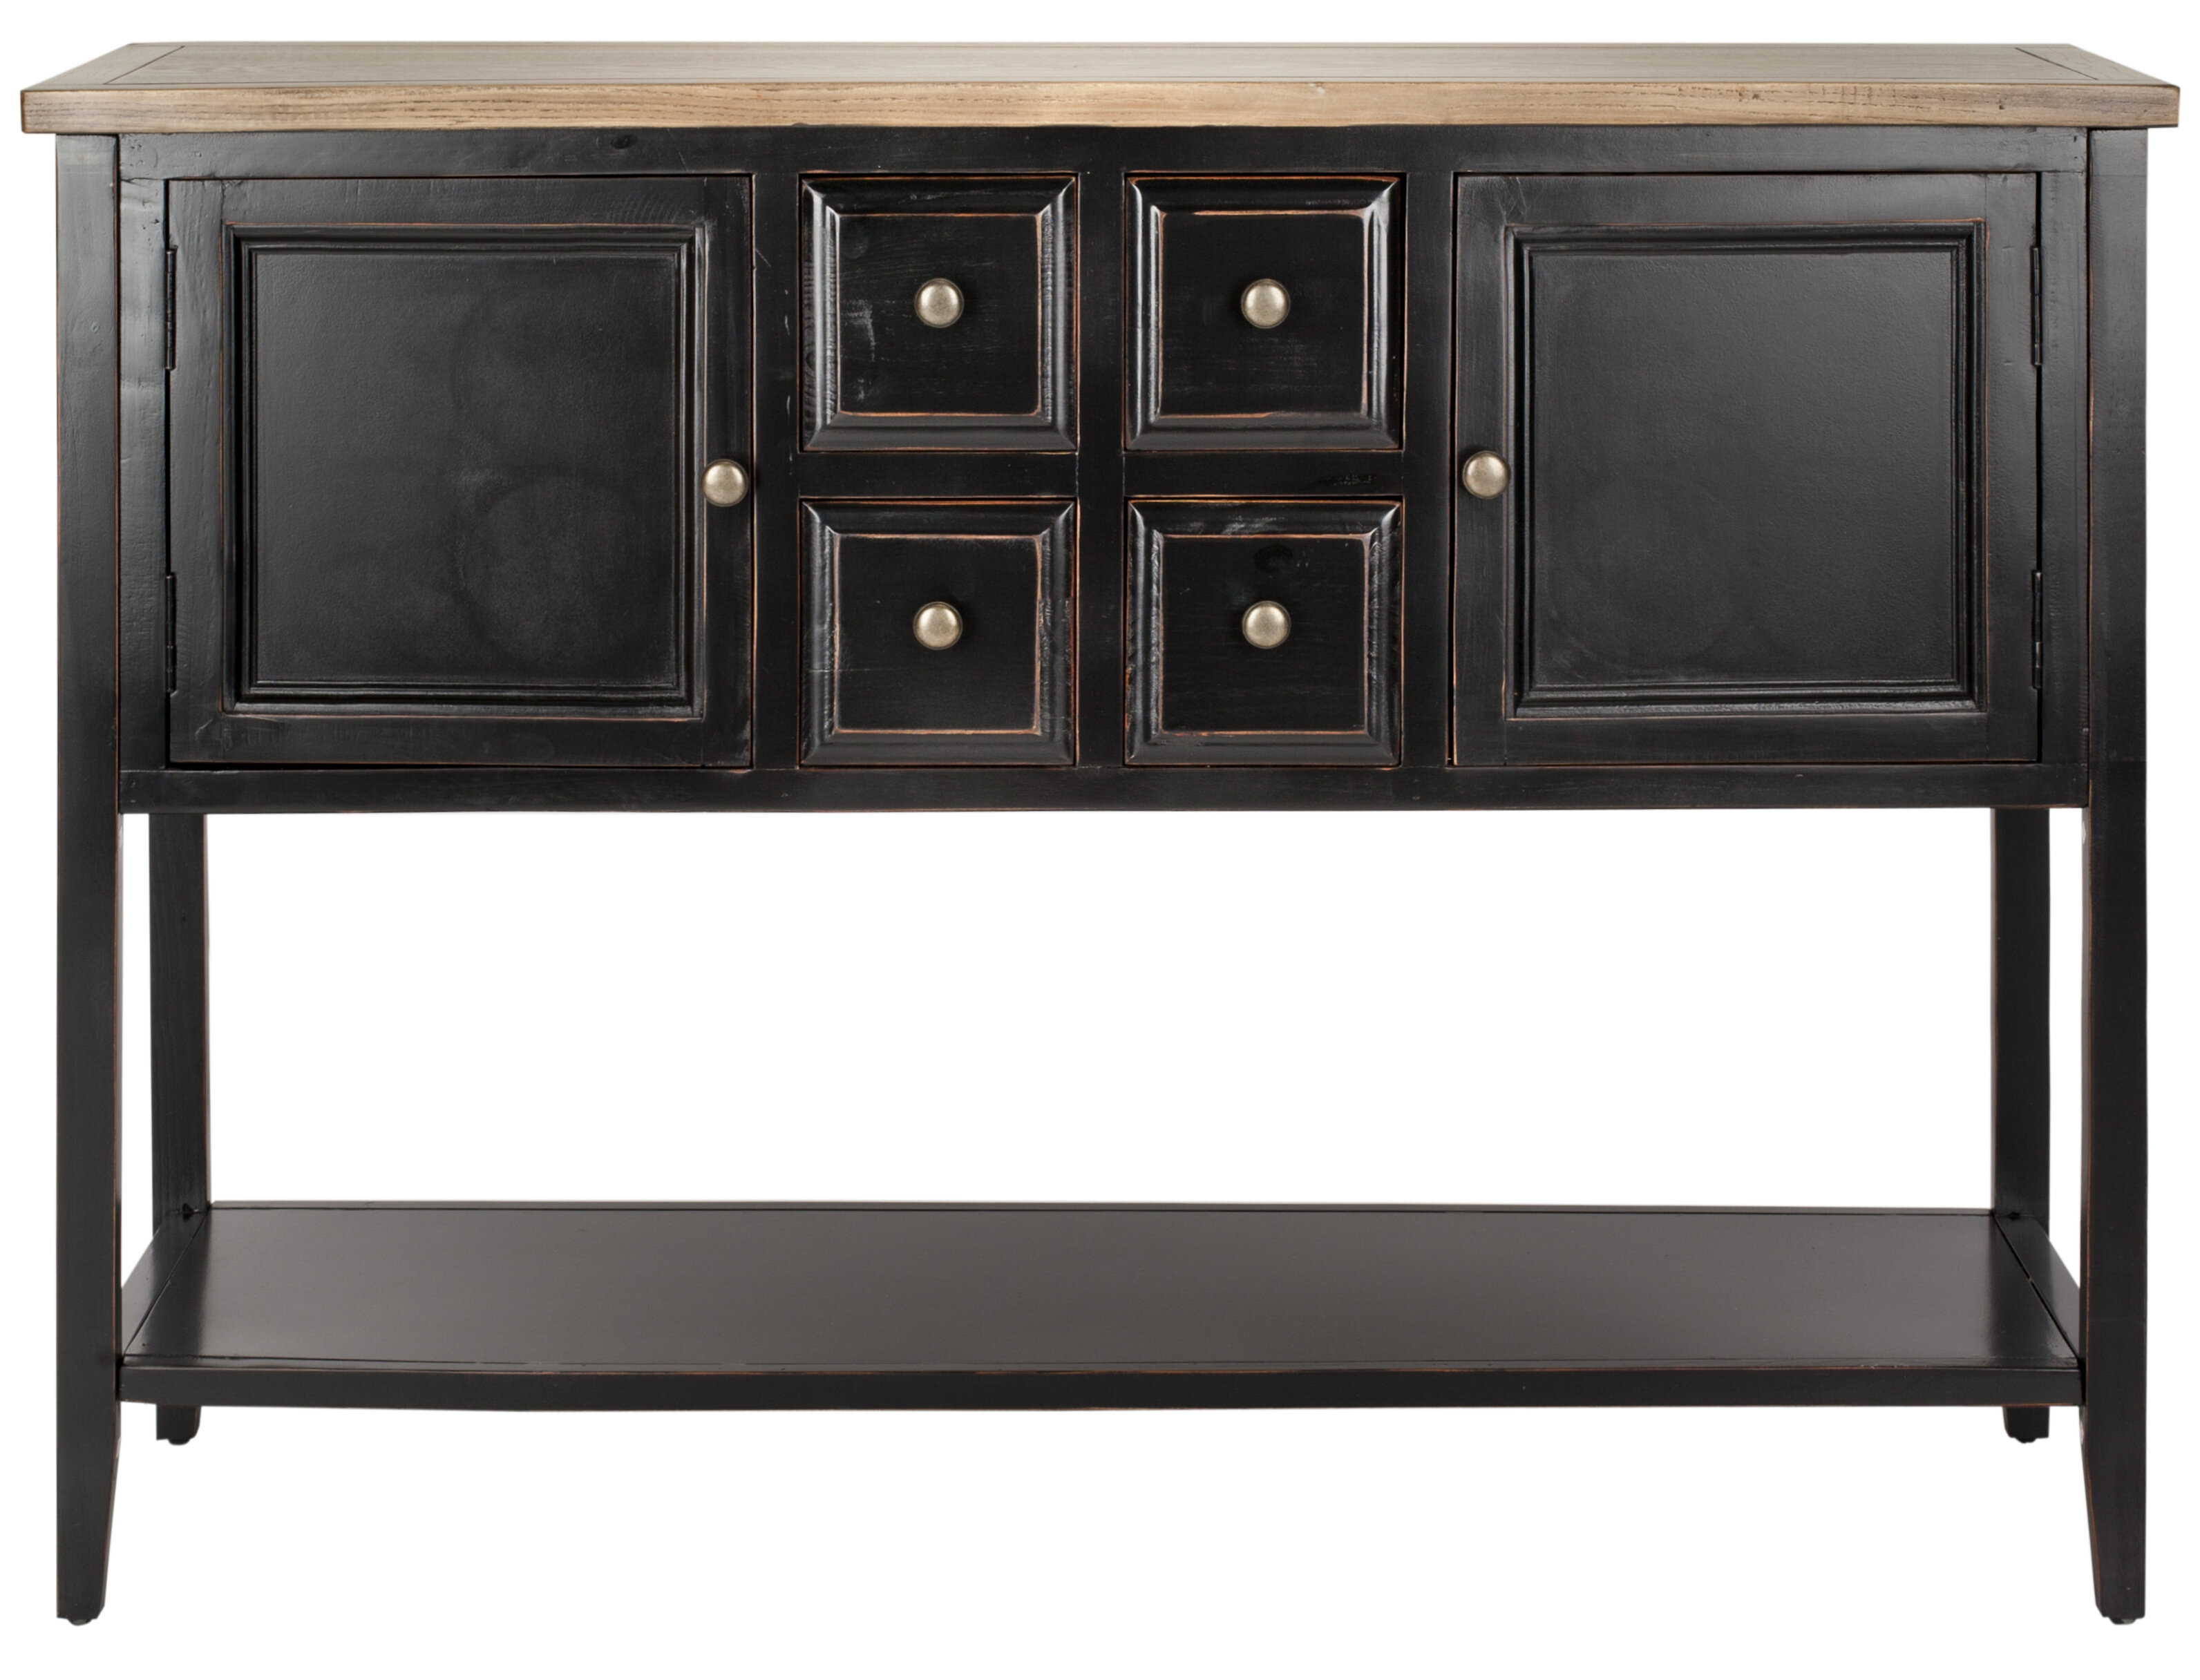 en.casa Modern console table 2 drawer wood look MDF steel legs /80x40x45 cm white 